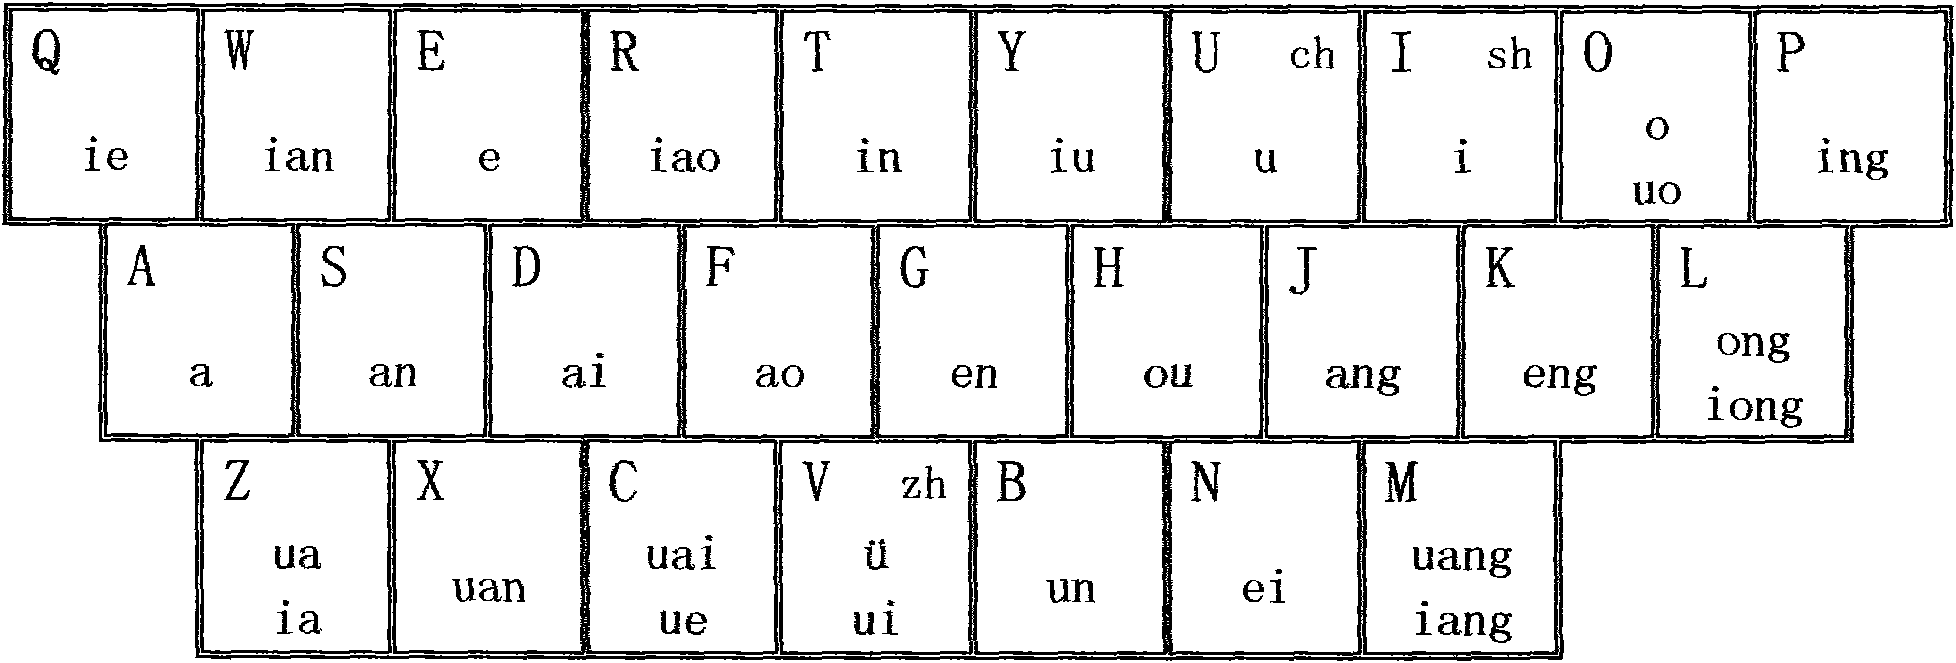 Binary-syllabification double-glyph input method